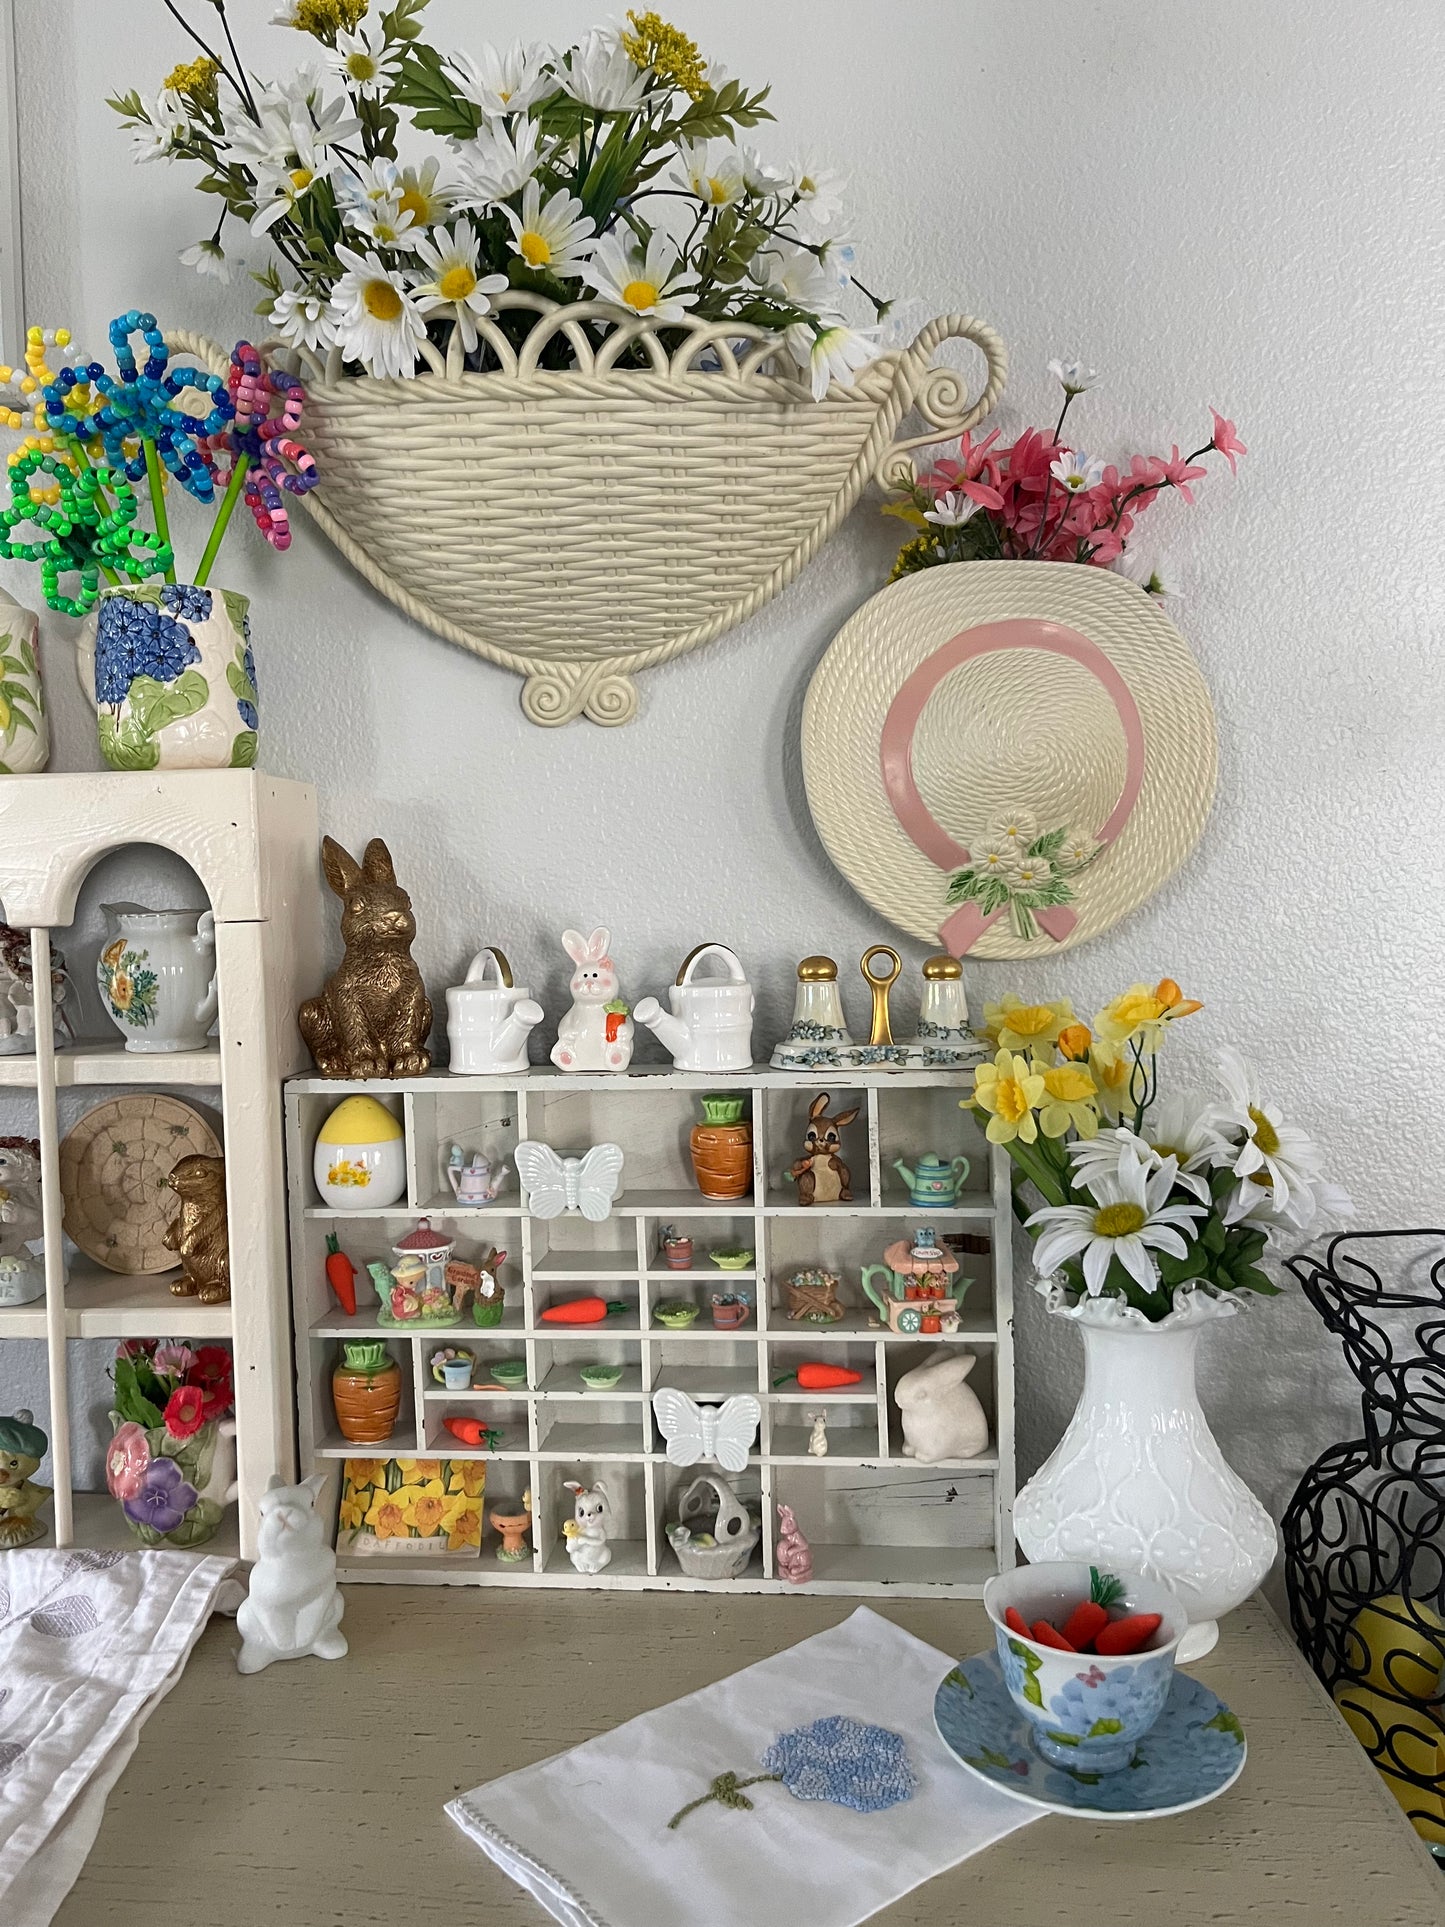 Sweet Vintage Ceramic Bunny with Baby Chick &  Orange Flower - Kitschy Nostalgic Cottage decor